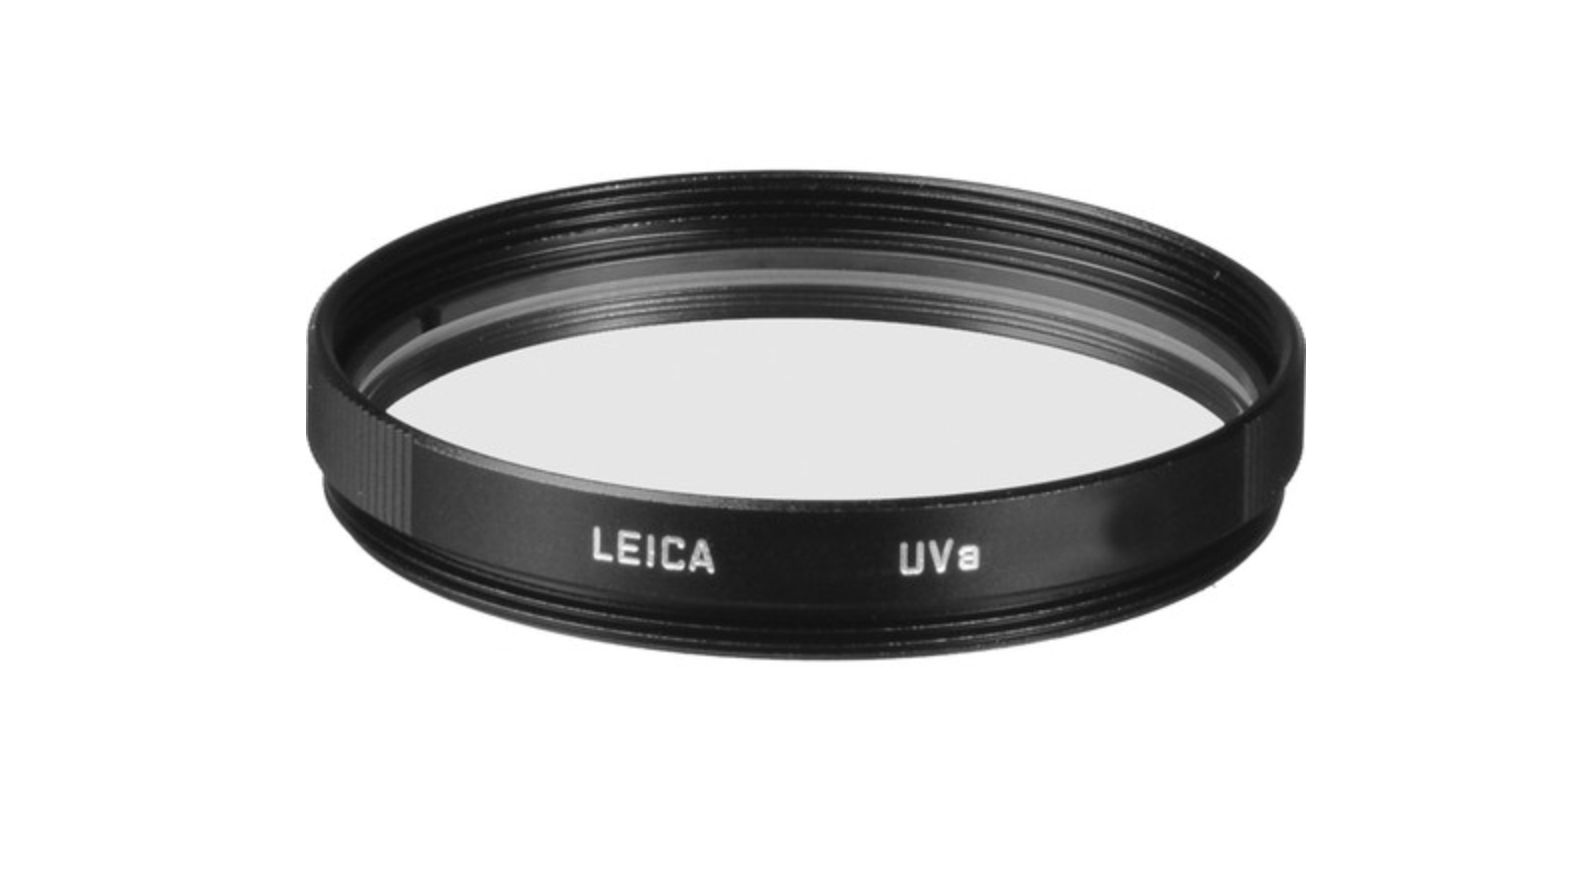 Leica E39 UVa Filter (Black)